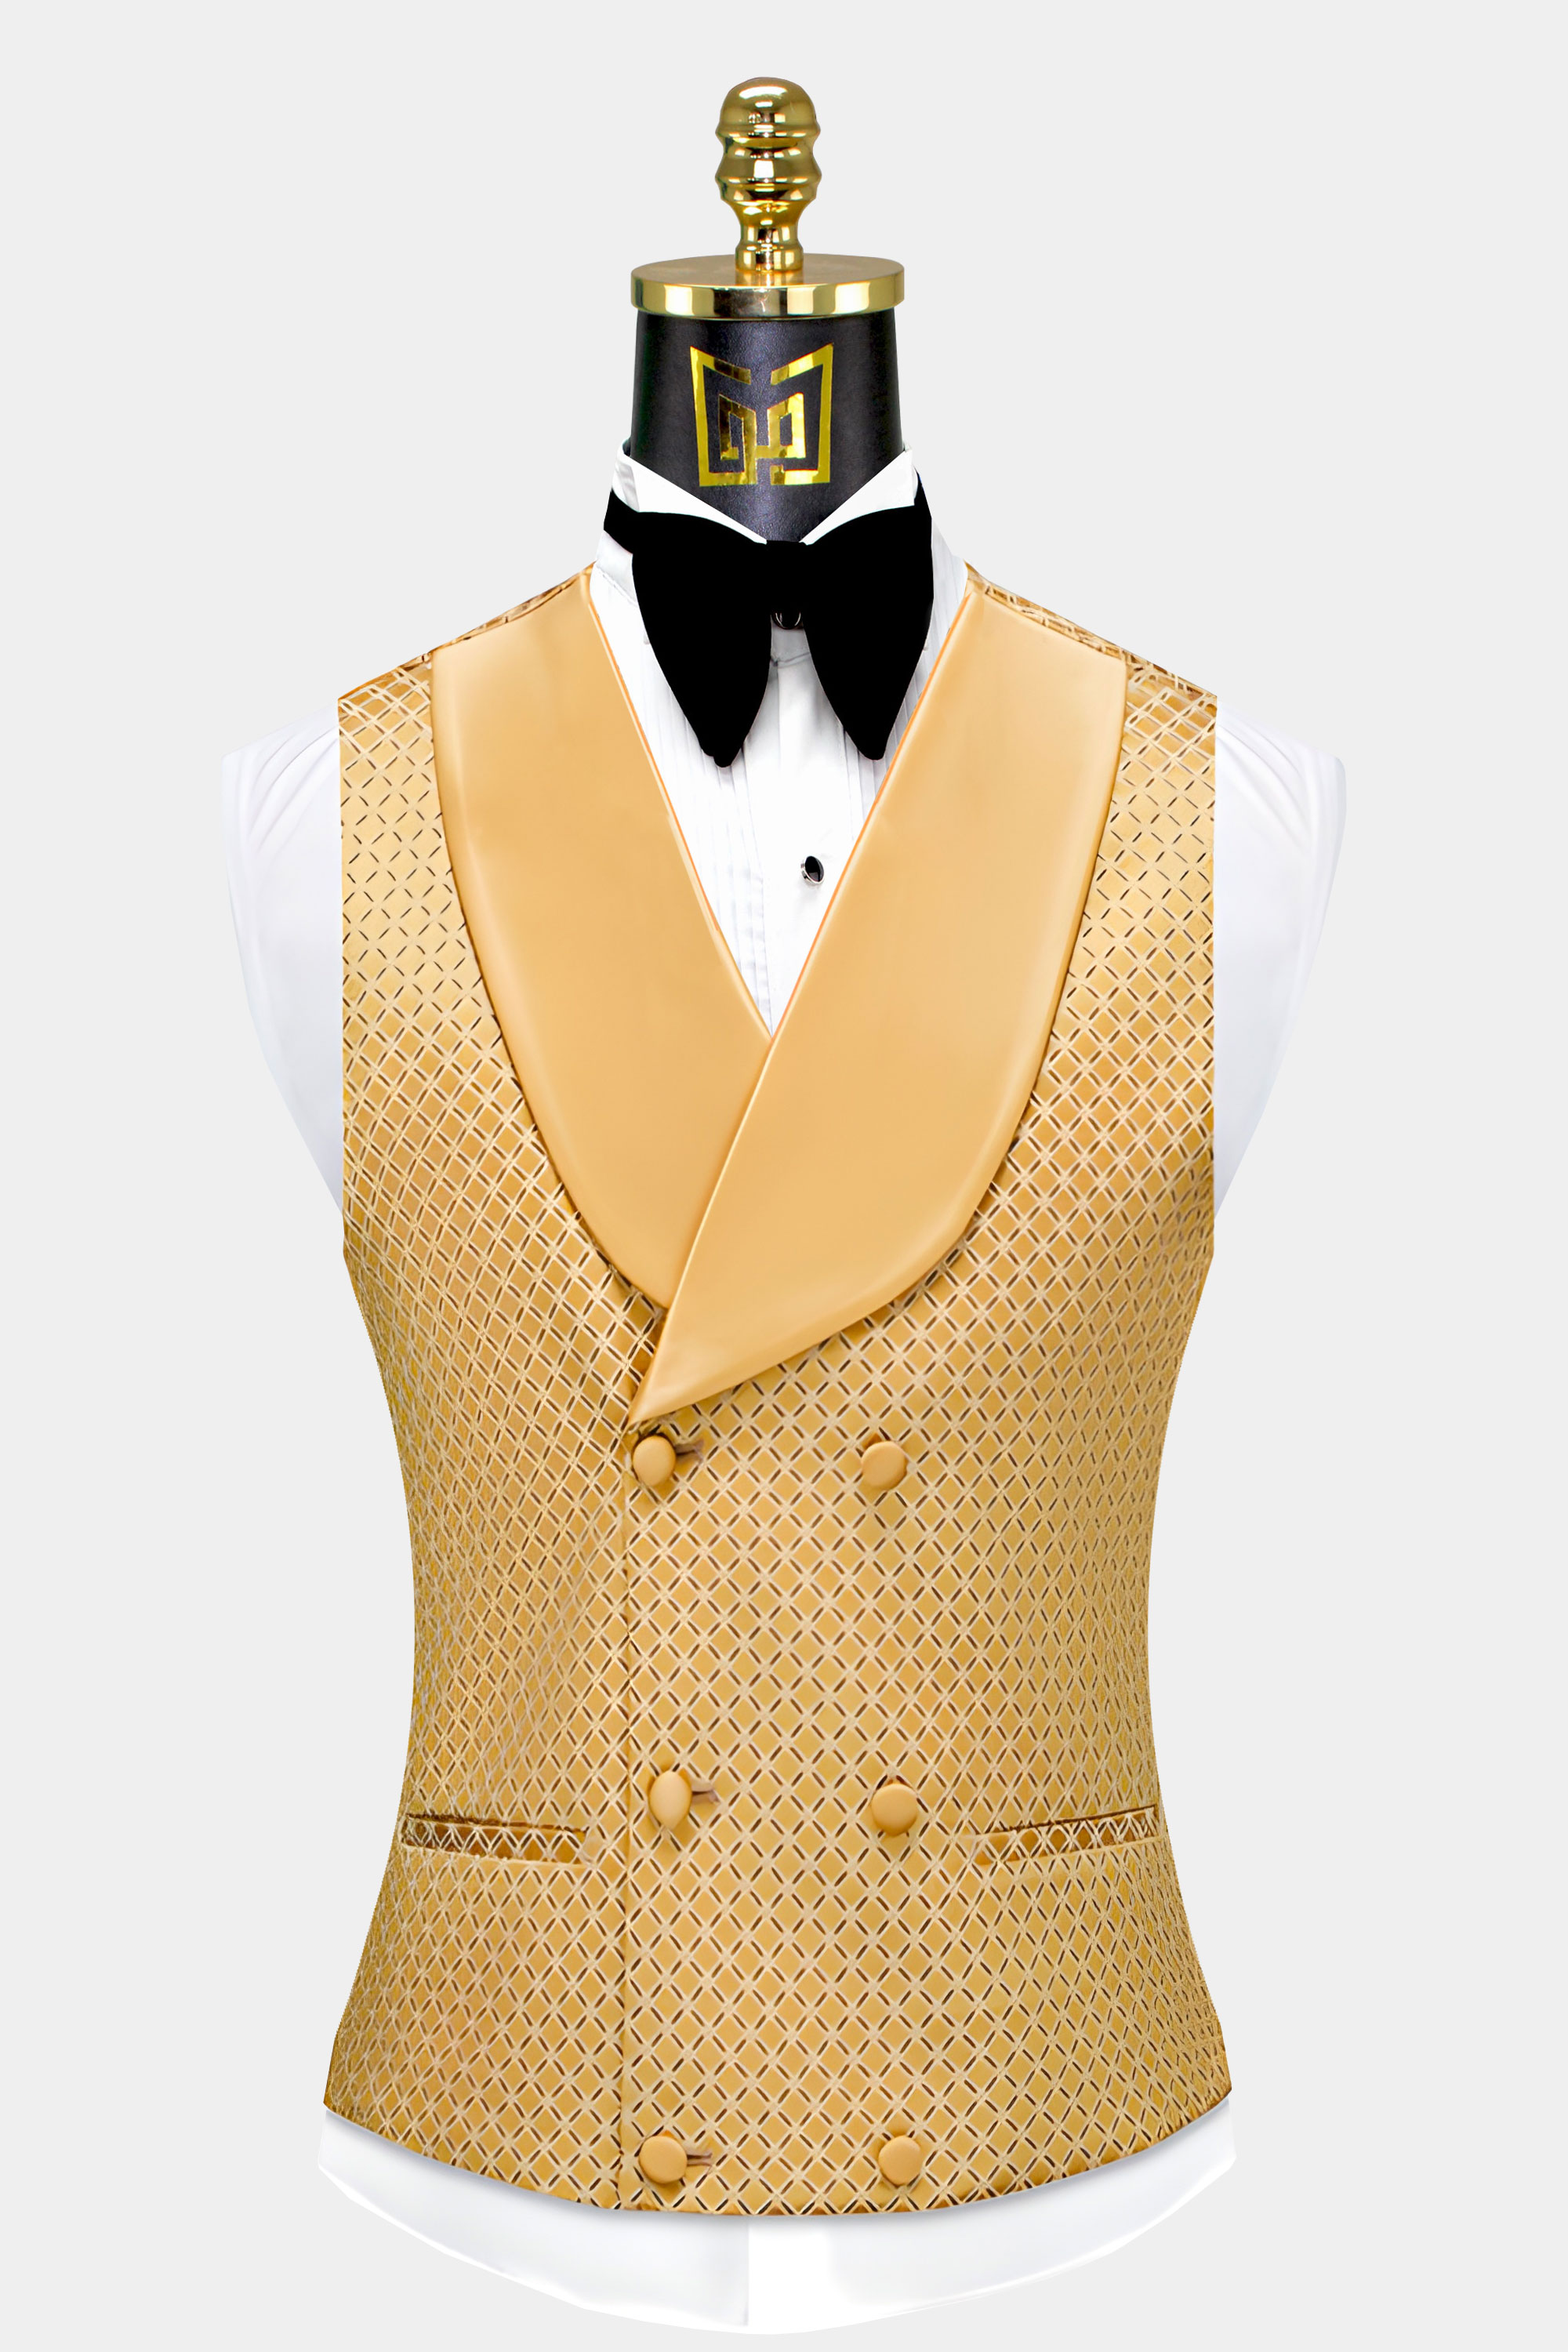 Gold-Checkered-Tuxedo-Vest-from-Gentlemansguru.com